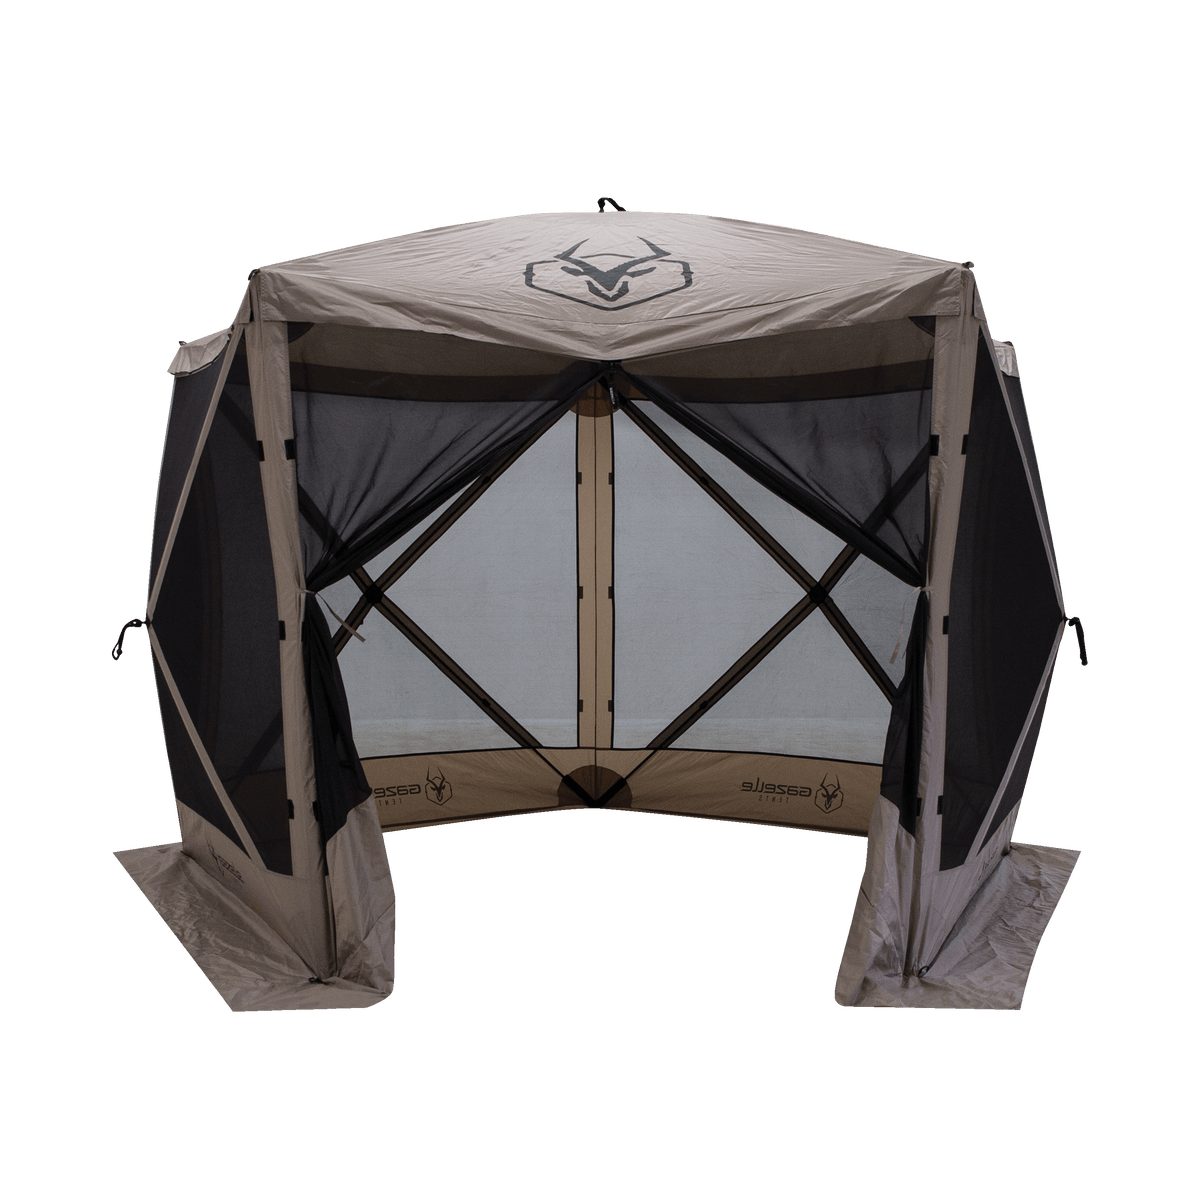 Gazelle Tents G5 5-Sided Portable Gazebo, Easy Pop-Up Hub Screen Tent,  Waterproof, UV Resistant, 4-Person & Table, Desert Sand, 85